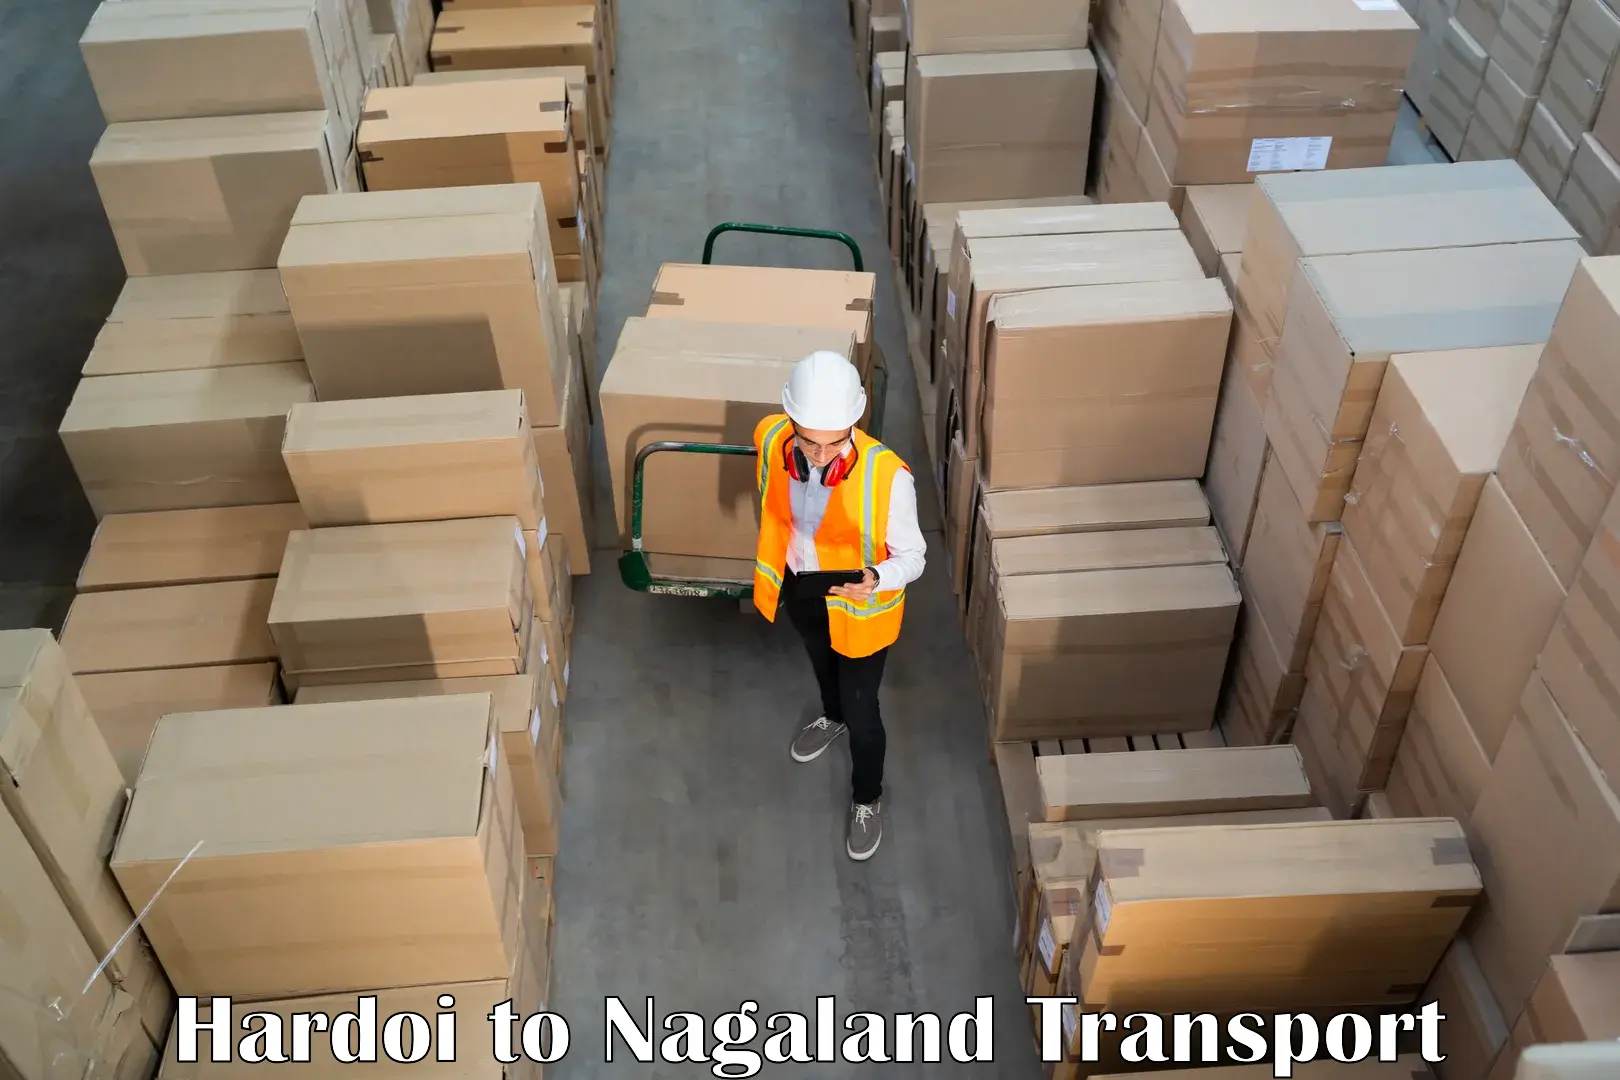 Furniture transport service Hardoi to Nagaland